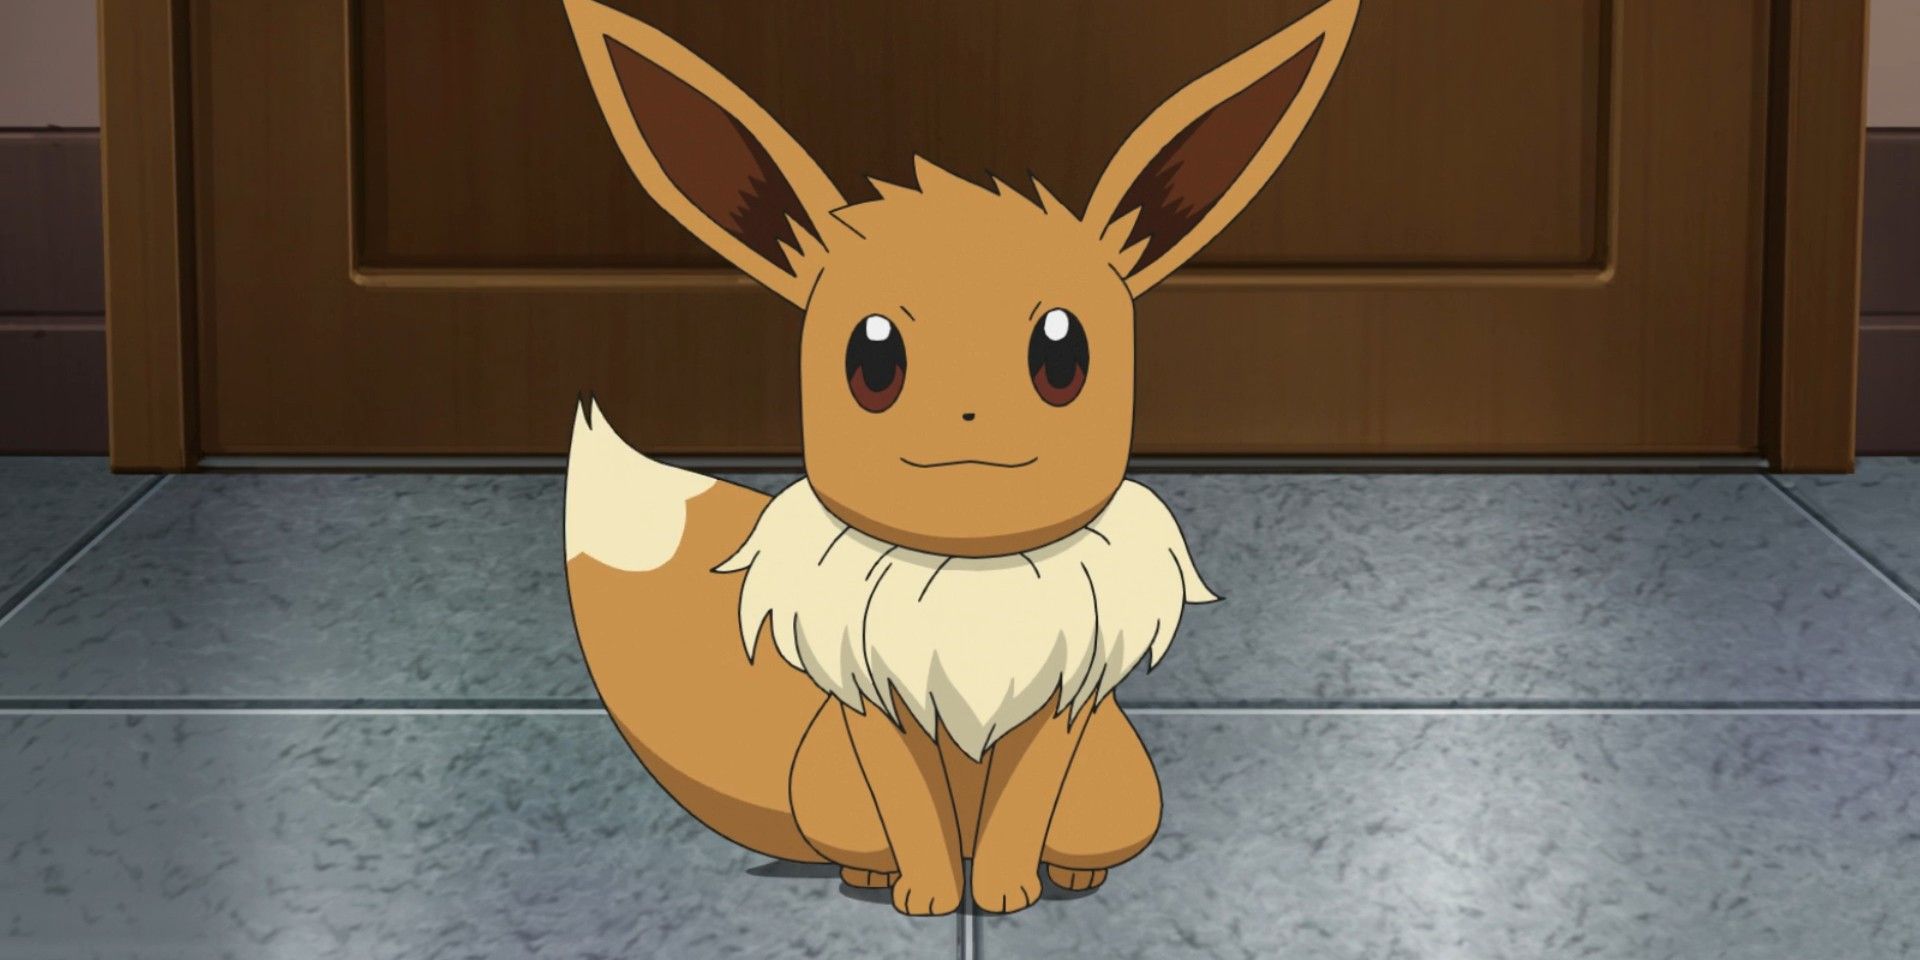 Eevee Sitting on floor in the Pokémon anime